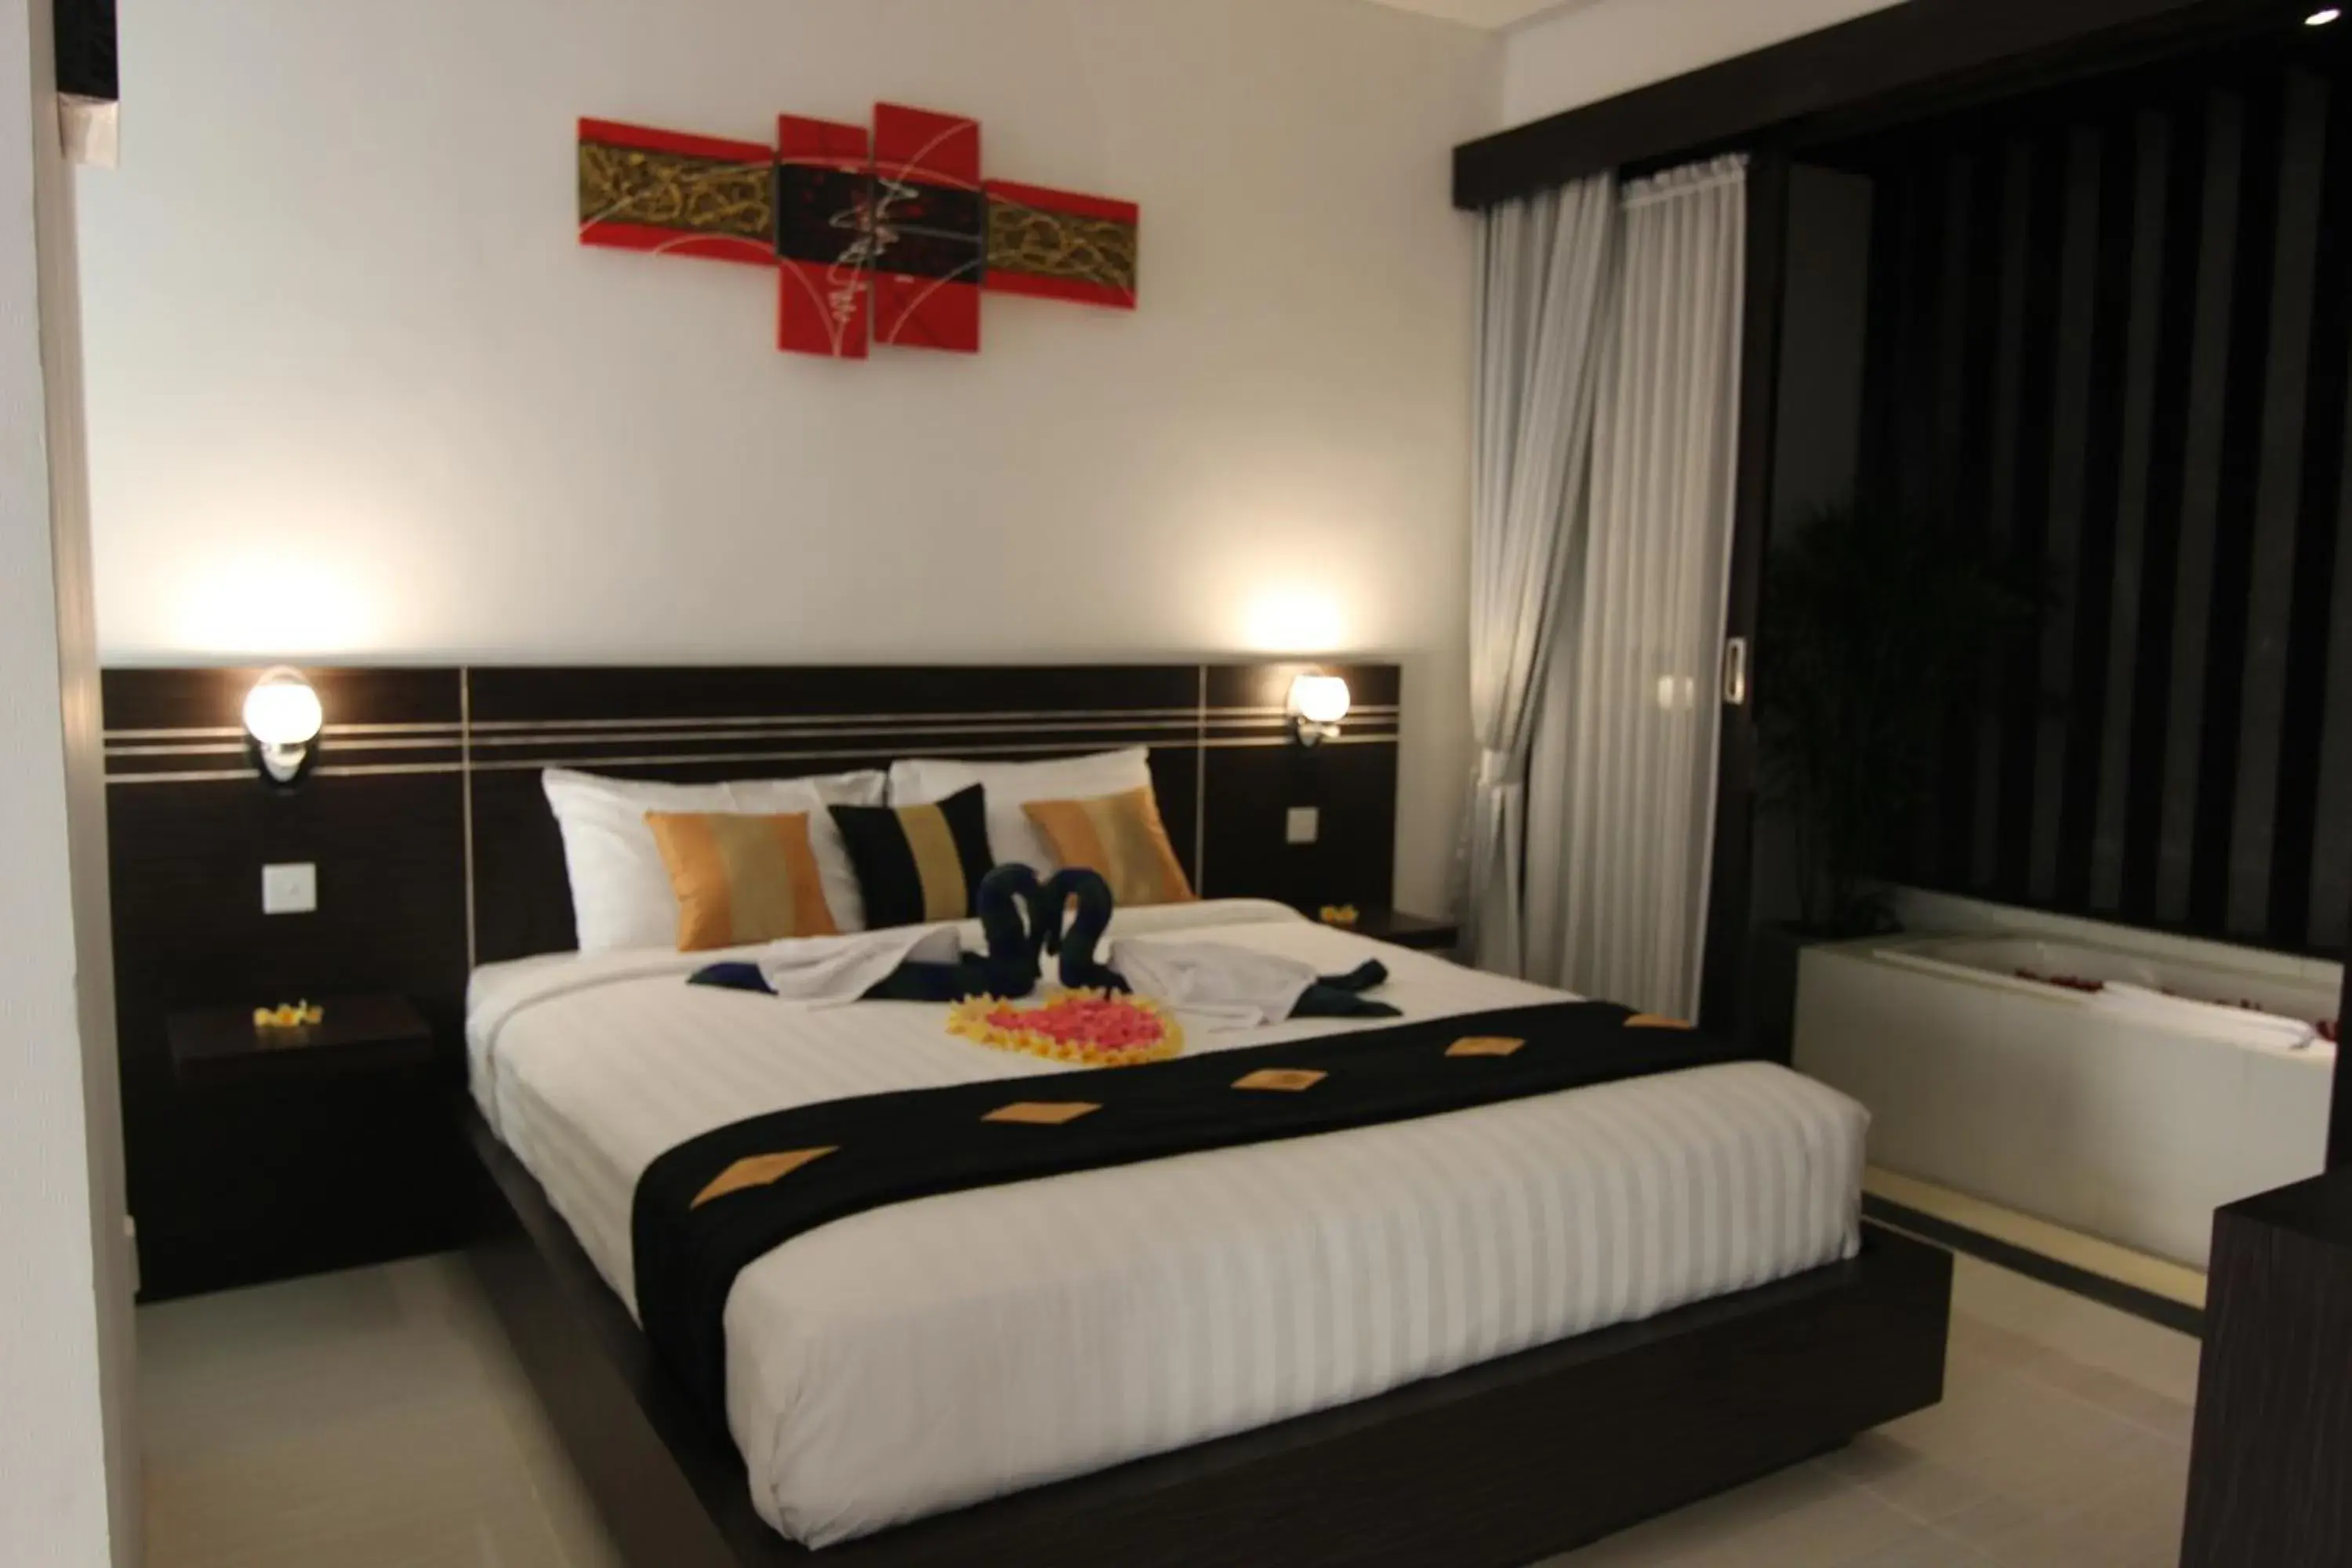 Bedroom, Room Photo in The Diana Suite Hotel